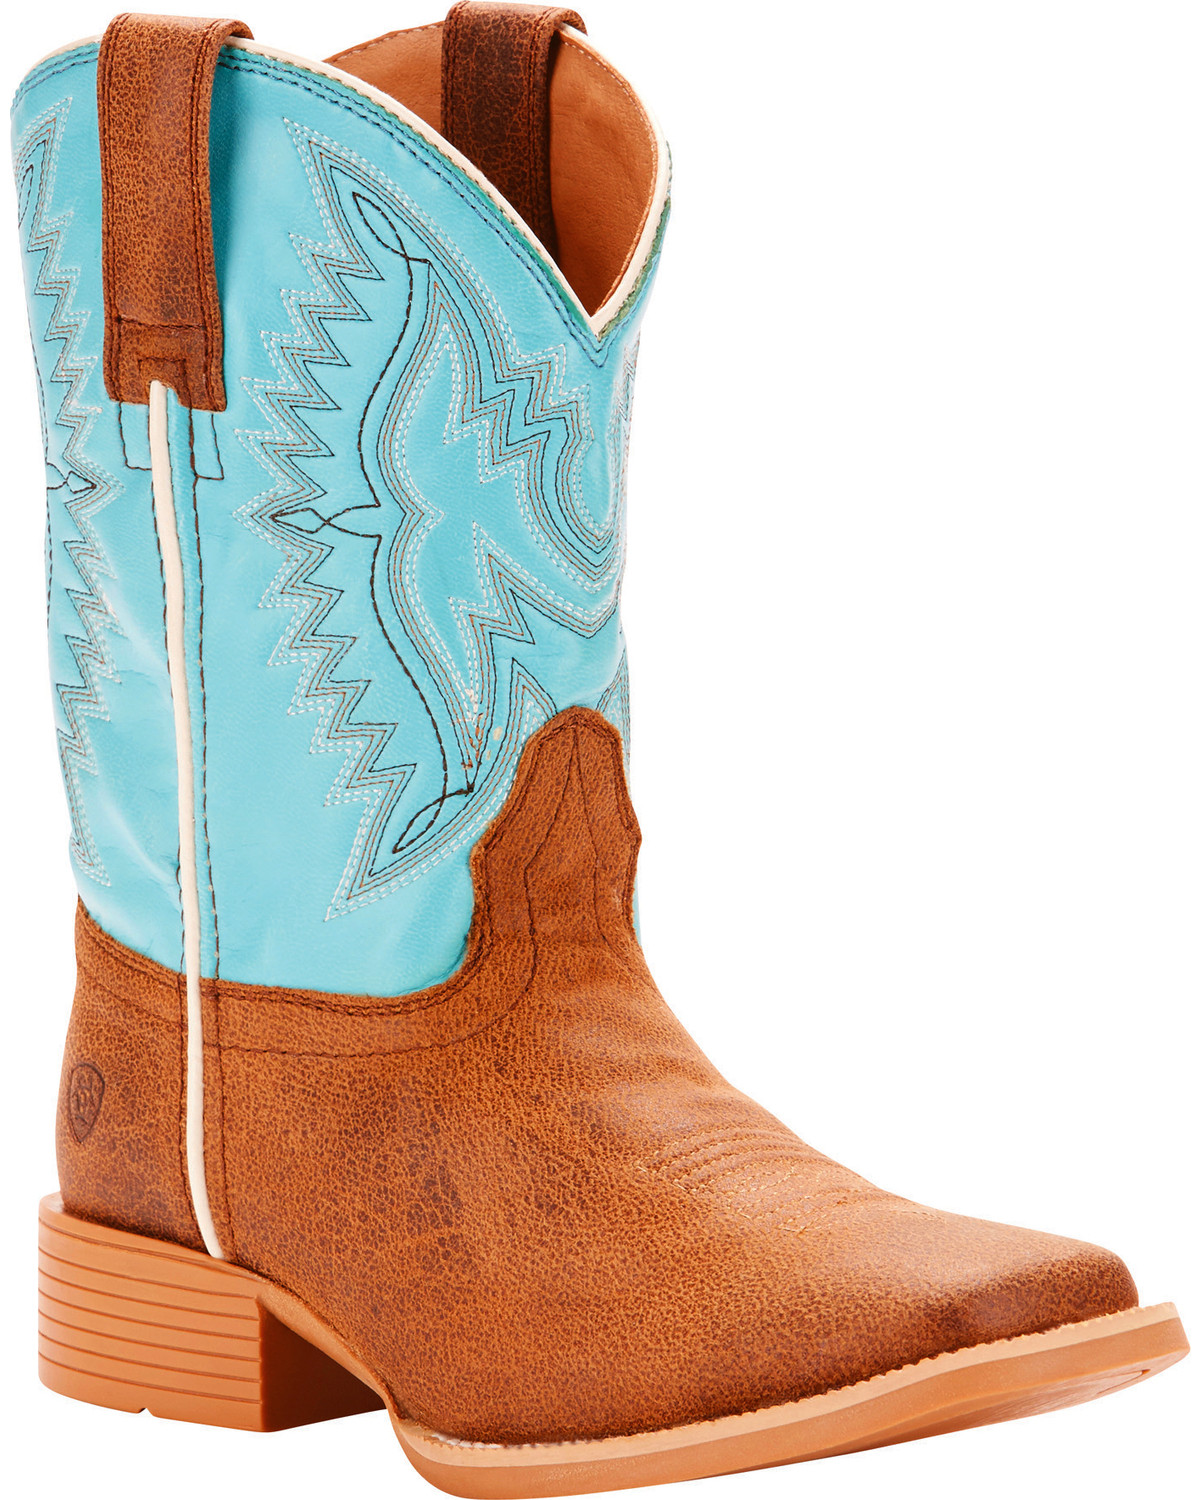 cowboy boots teal